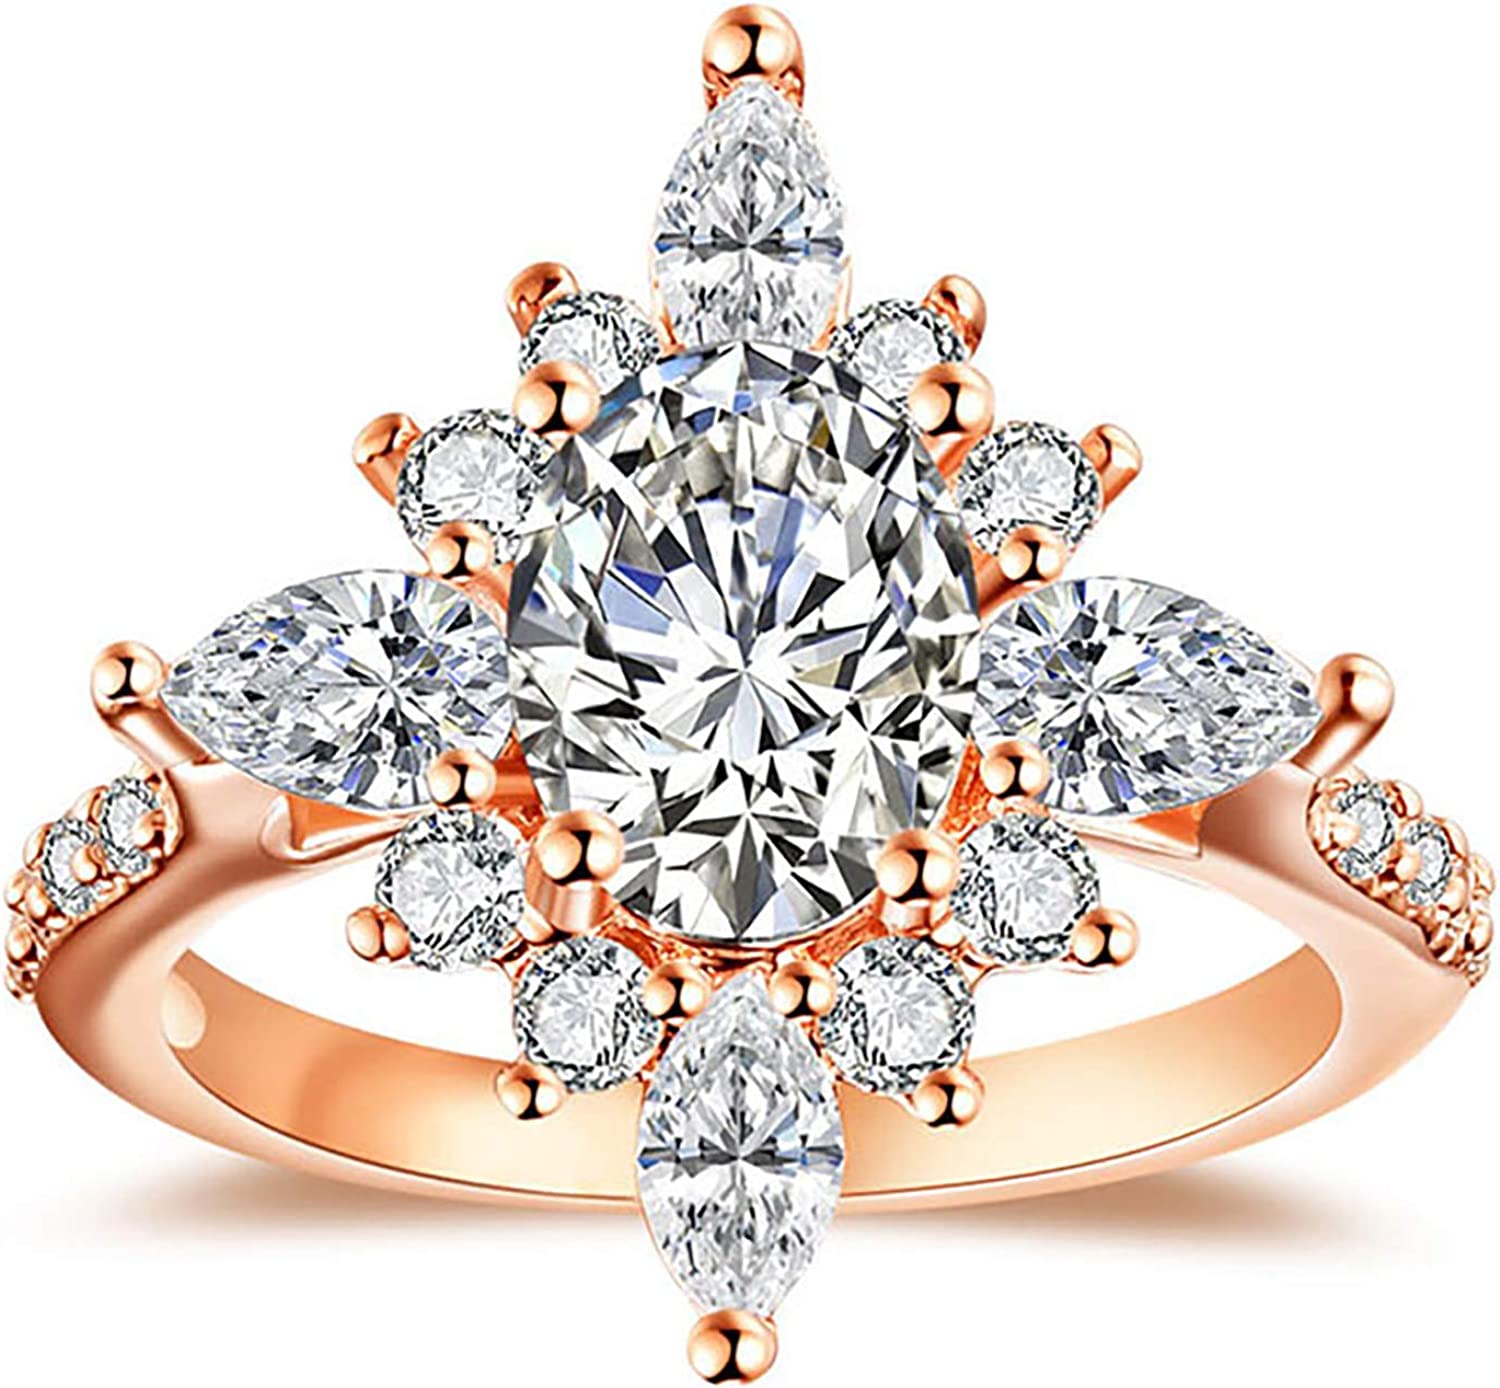 Alex's Wish List Starburst Sunburst Ring | Womens Vintage Style Statement Cocktail Ring | Unique Design Rose Gold Plated Cubic Zirconia | Evita Fashion Jewelry